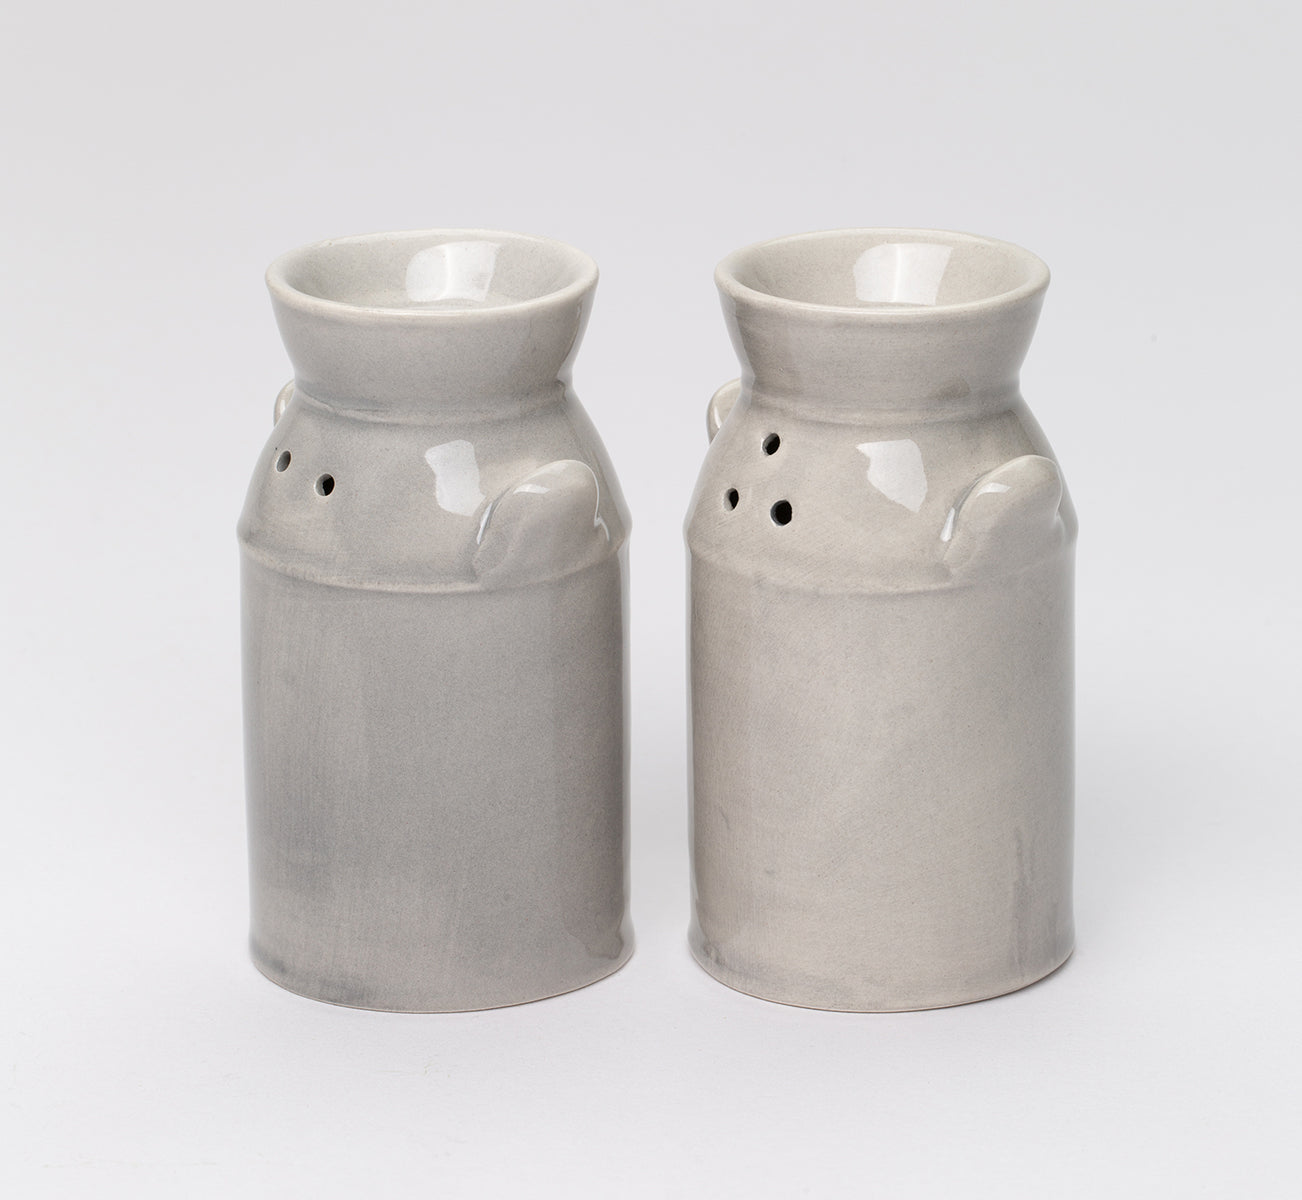 Ceramic Milk Jug Salt And Pepper Shakers, Home Décor, Gift for Her, Mom, Farmhouse Kitchen Décor, Vintage Decor